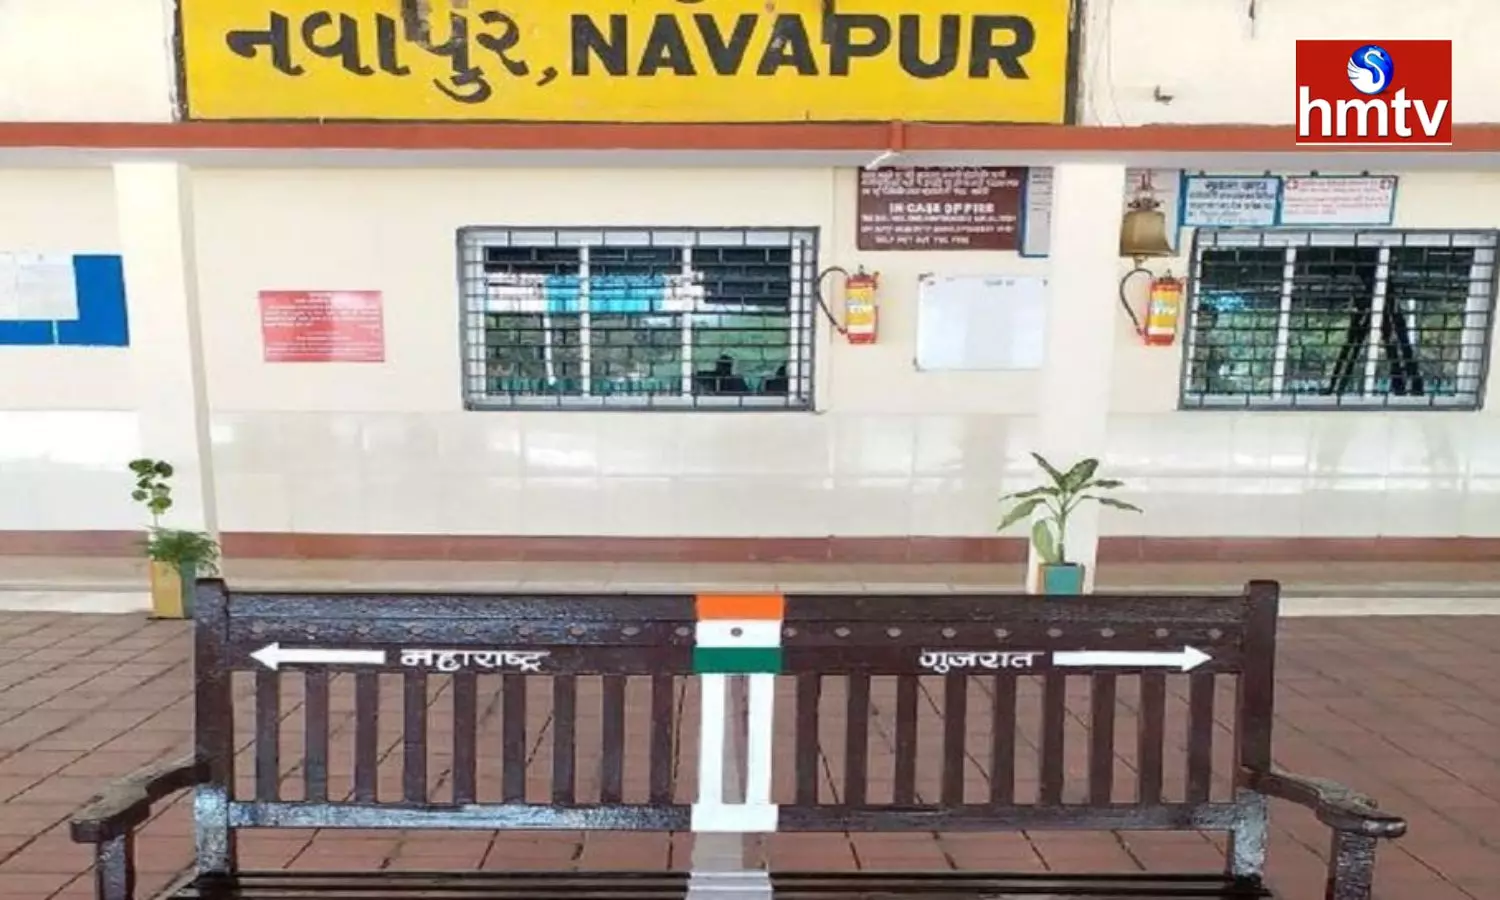 Indian Railways Fatcs Navapur Railway Station Unique in India Maharashtra Gujarat States